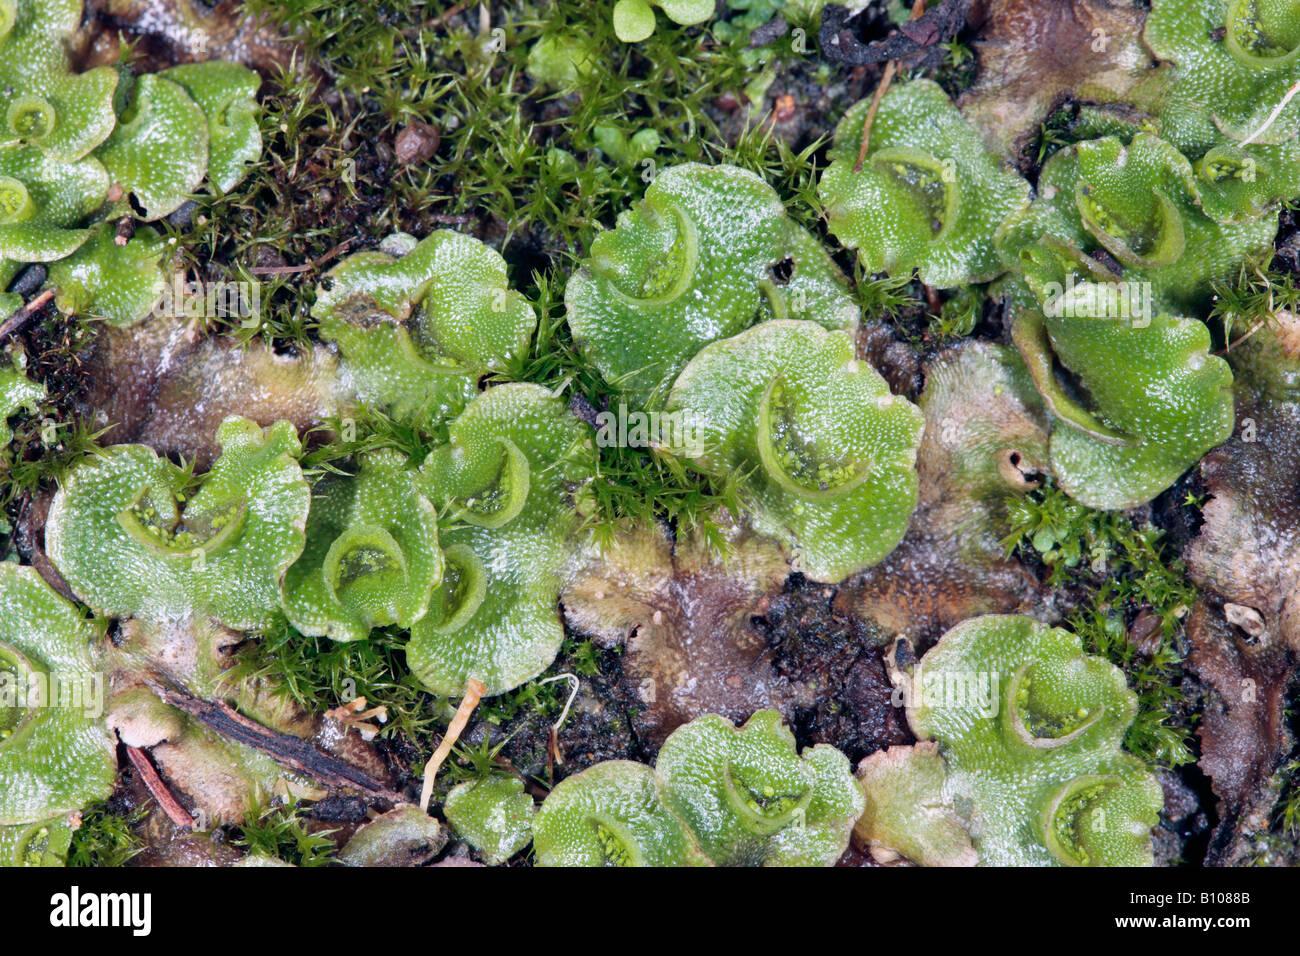 close-up-of-thallose-liverwort-with-tortula-moss-showing-crescent-B1088B.jpg